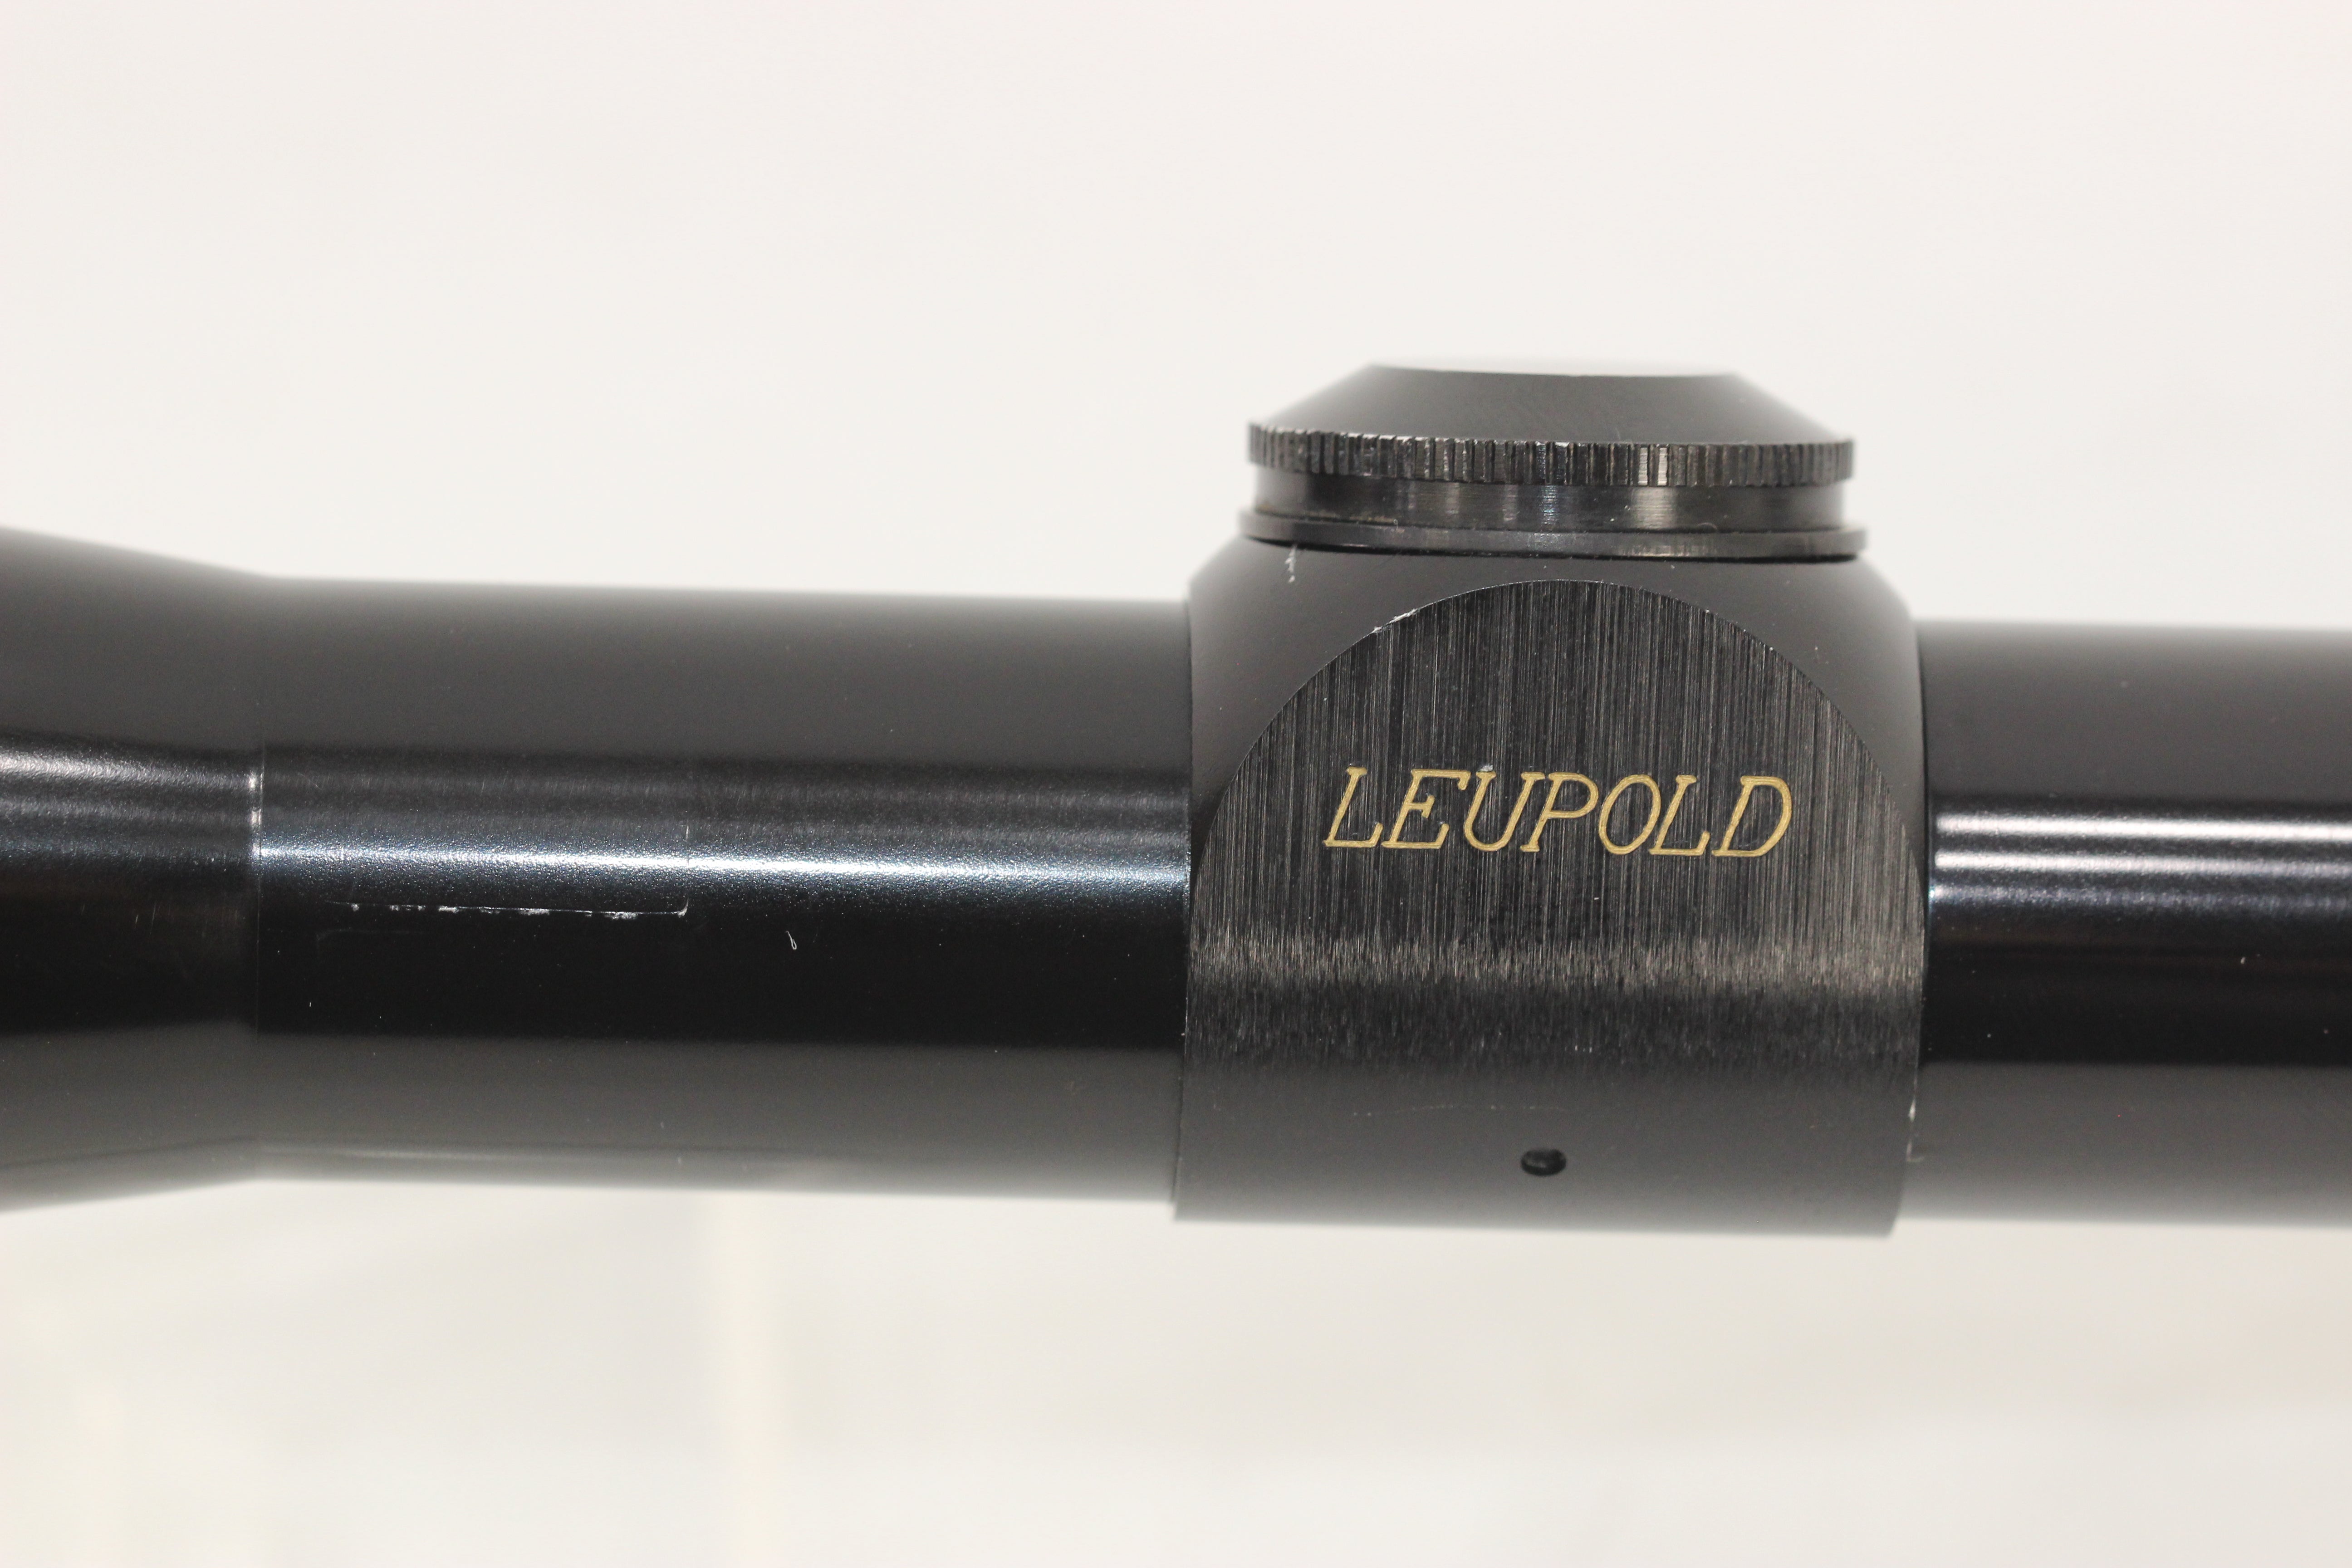 Leupold Vari-X 2-7x Compact Scope